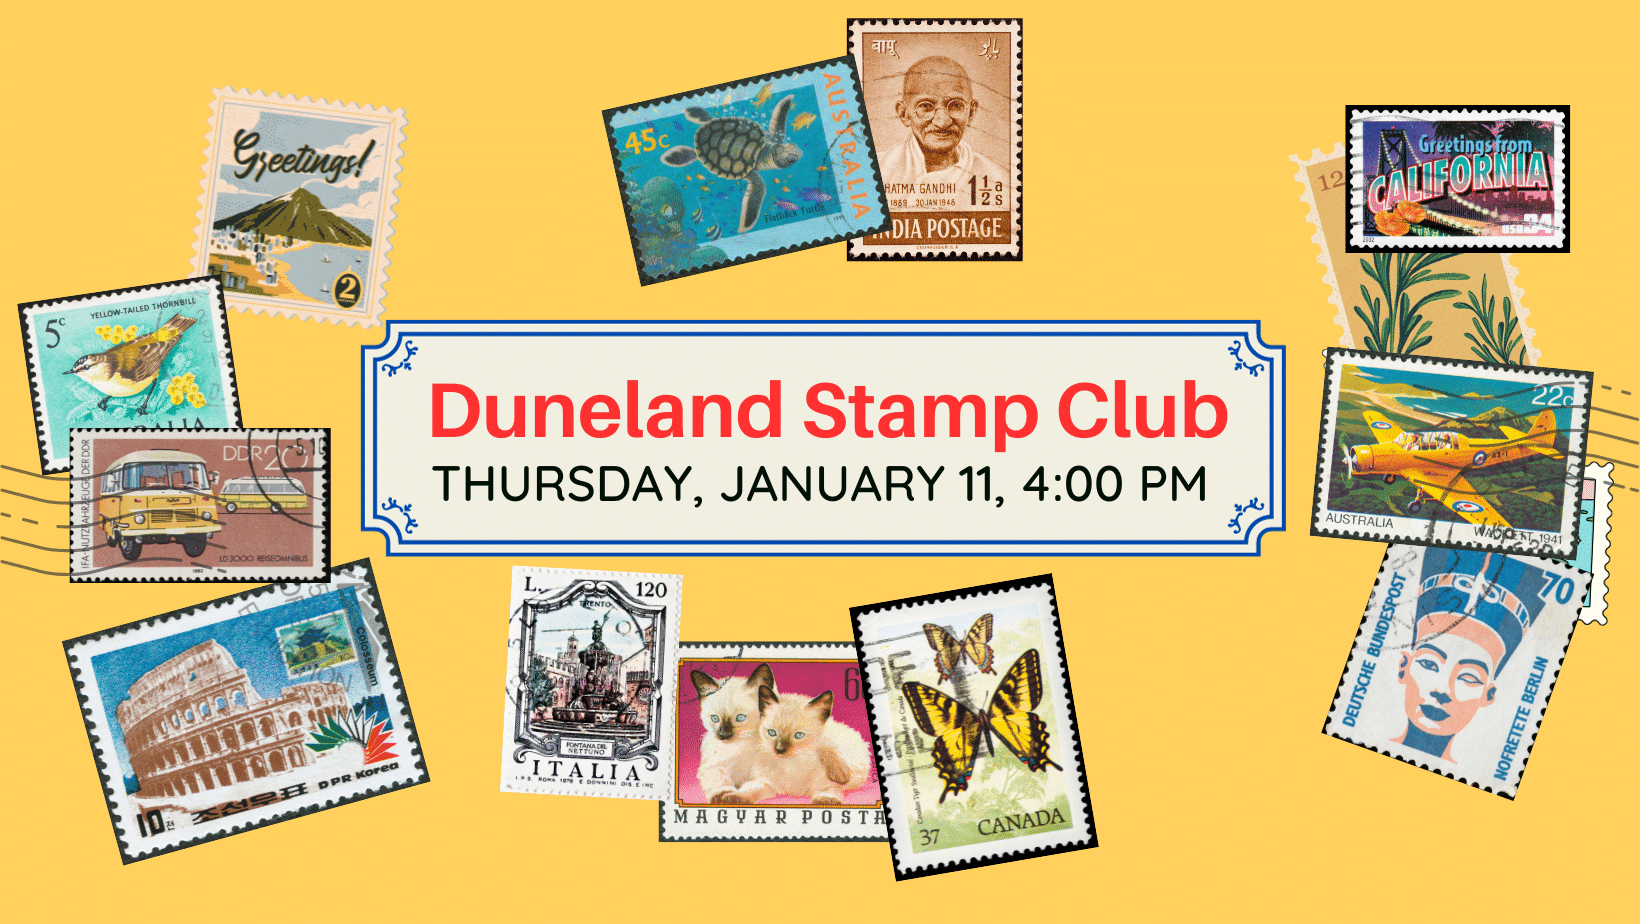 Duneland Stamp Club, Thursday, January 11, 4:00 pm